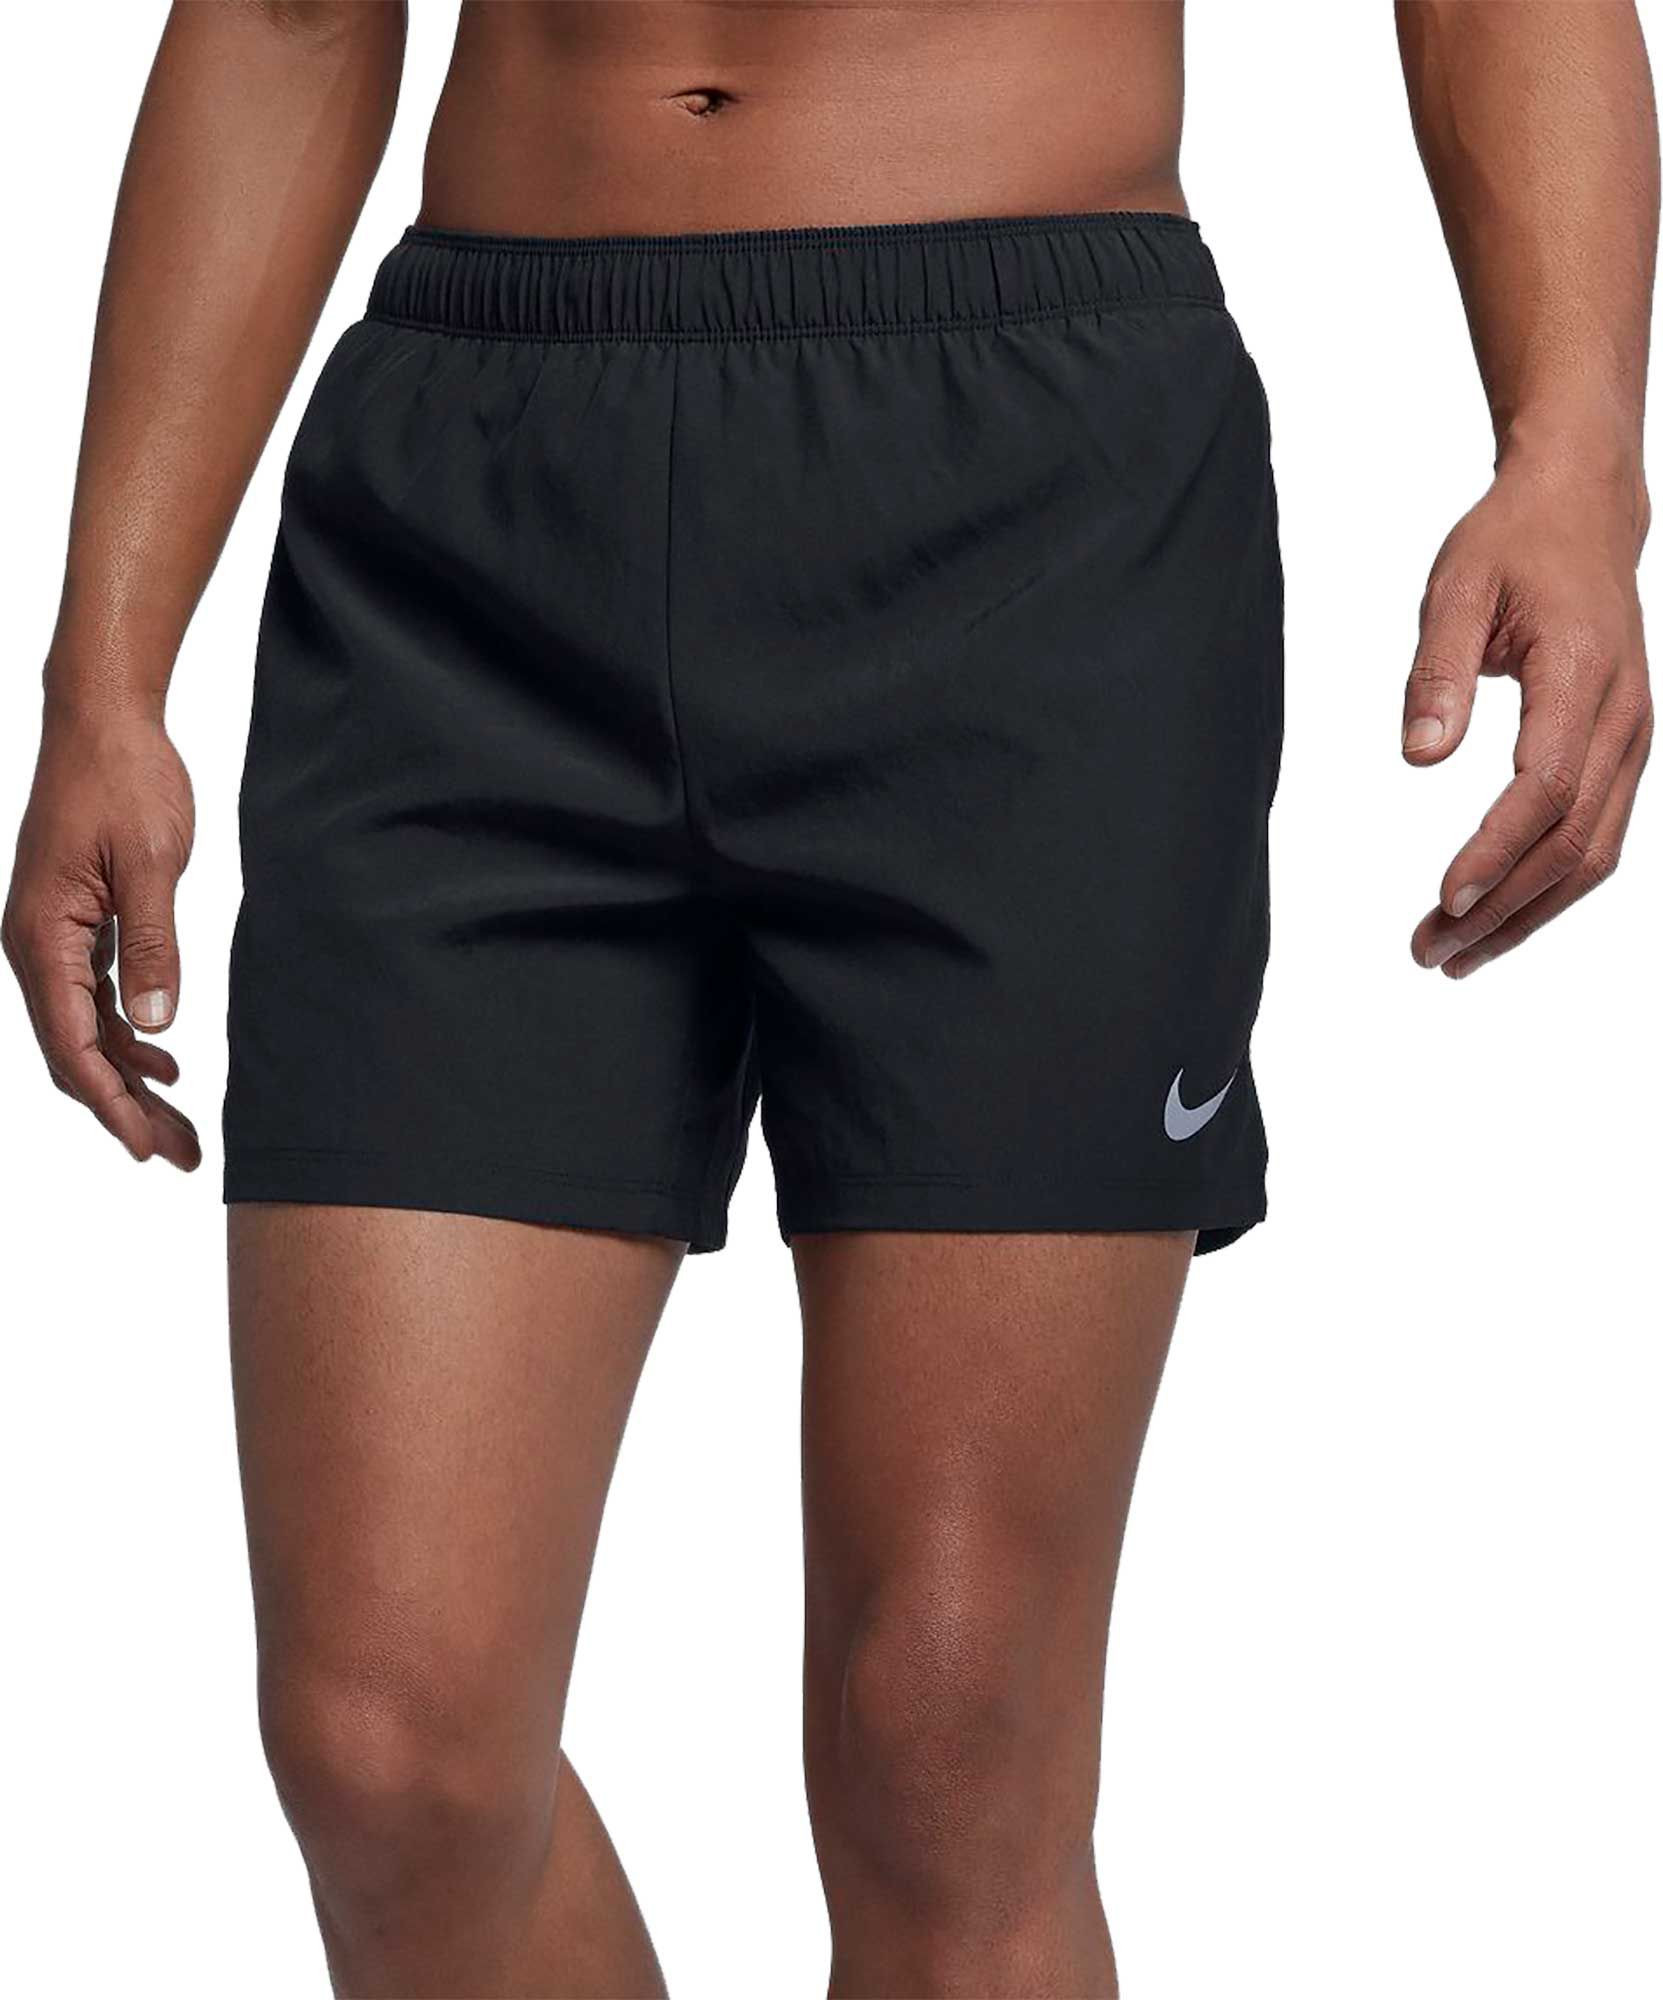 nike men's challenger 5 inch shorts